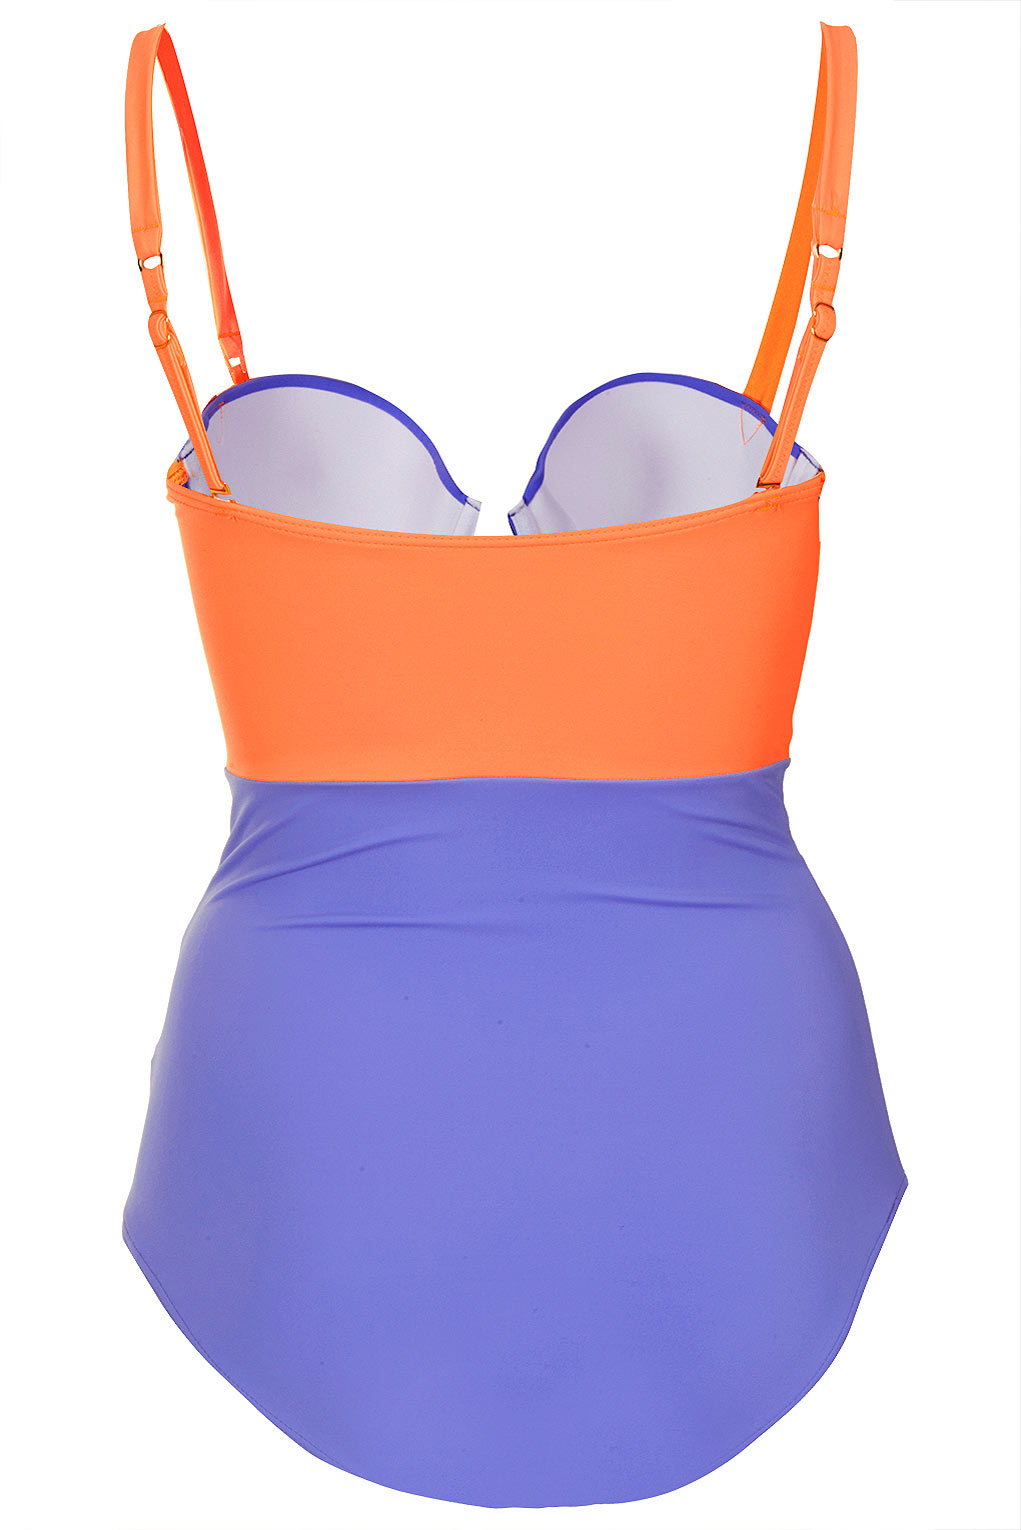 Lyst - Topshop Bluebell Colourblock Swimsuit in Purple